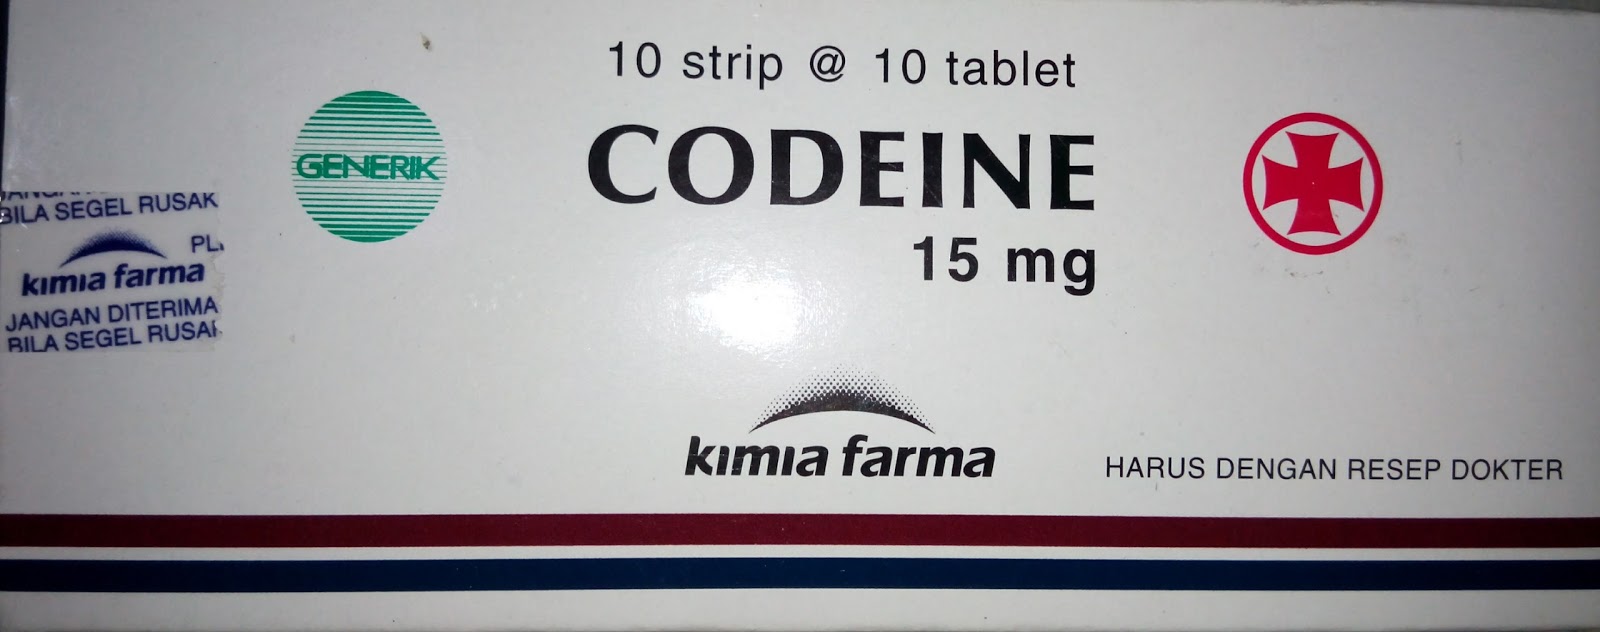 Кодеин рецепт на латинском. Кодеин 15 мг. Кодипронт. Tatanol Codein состав. Кодипронт купить.